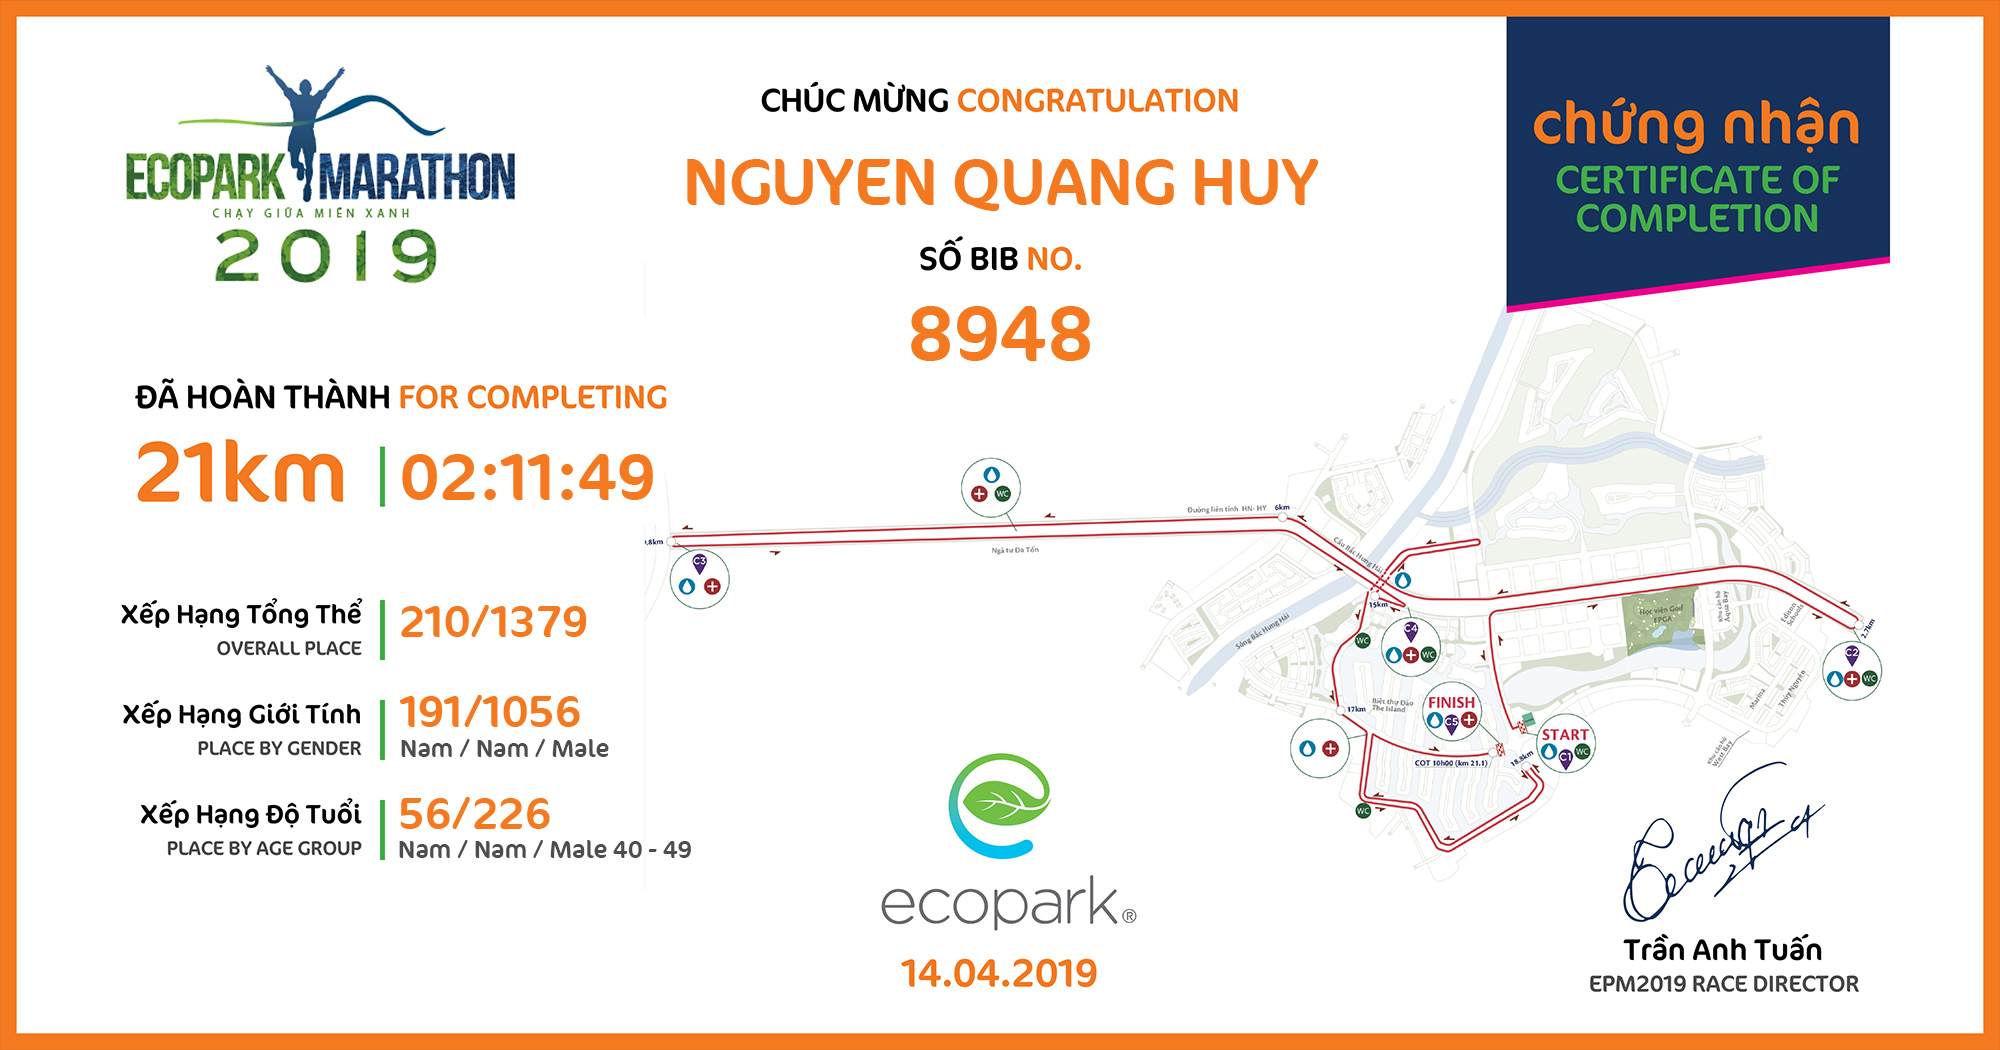 8948 - Nguyen Quang Huy